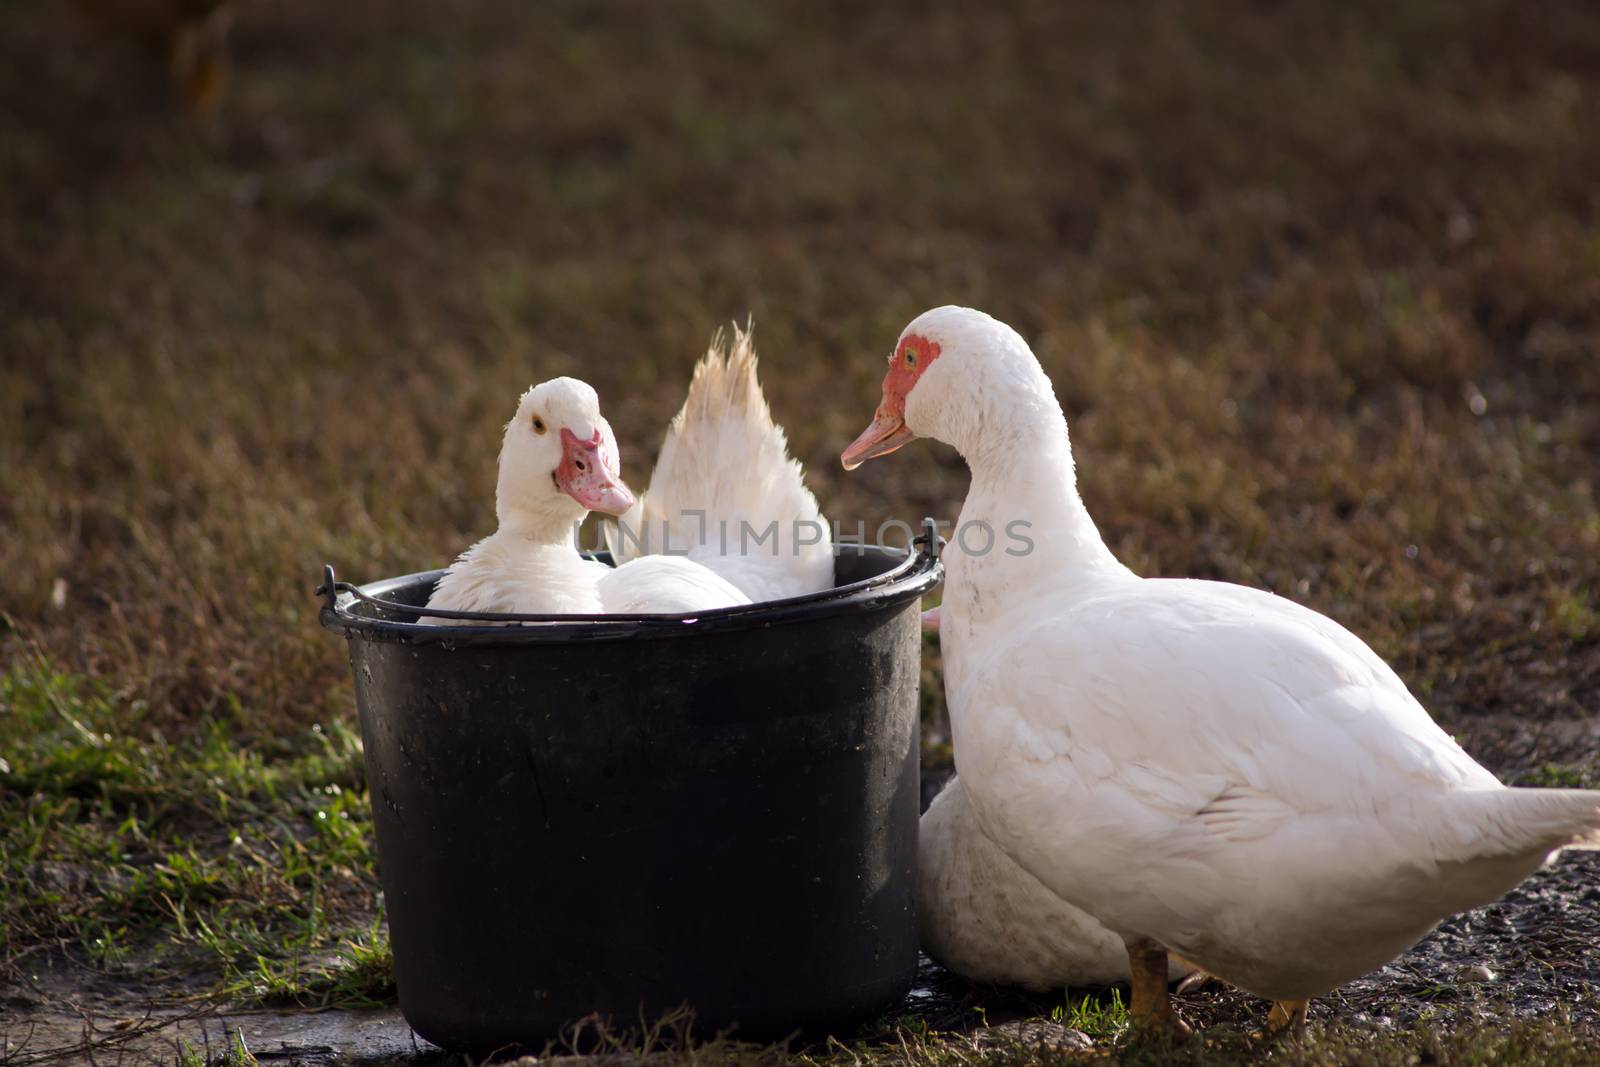 Bathe the duck (Cairina moschata) by dadalia